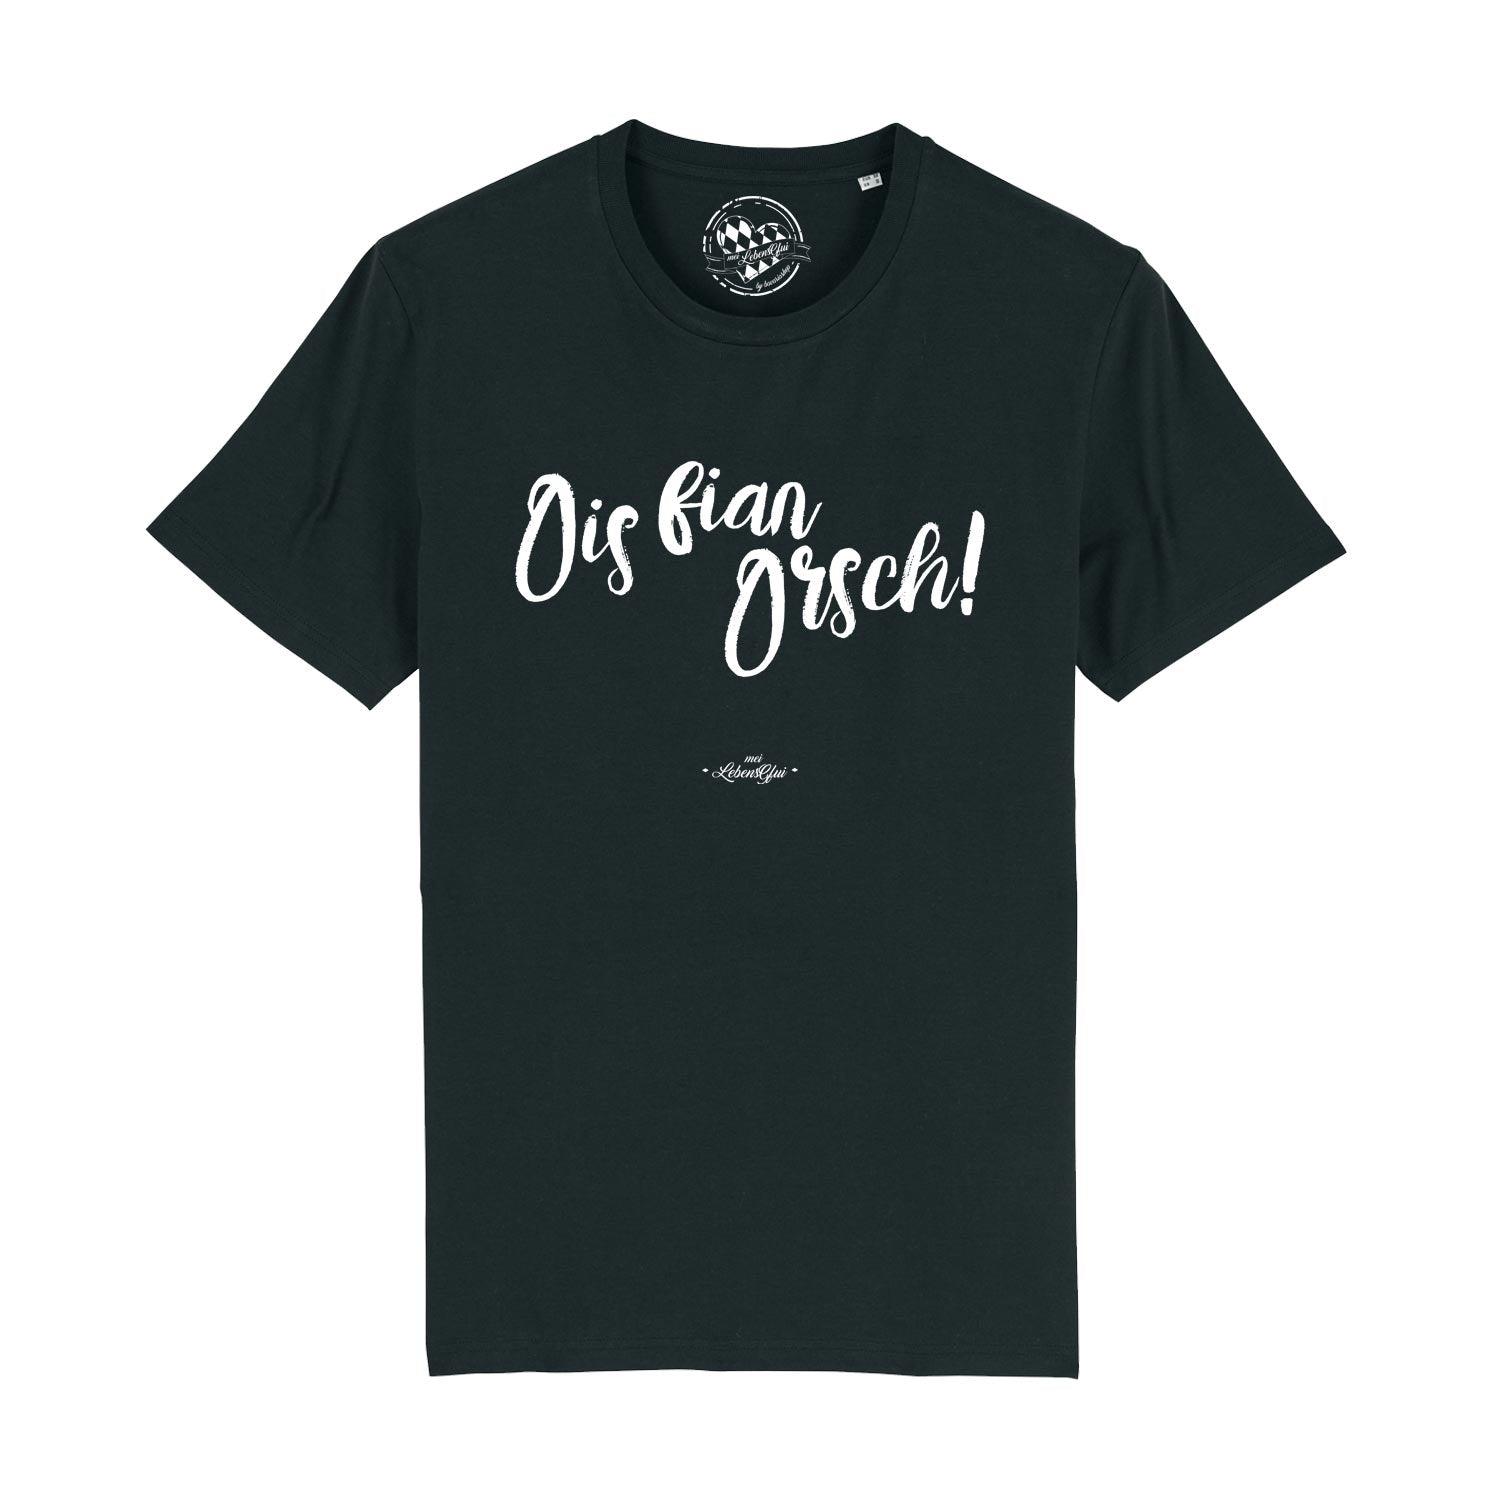 Herren T-Shirt "Ois fian Orsch" - bavariashop - mei LebensGfui